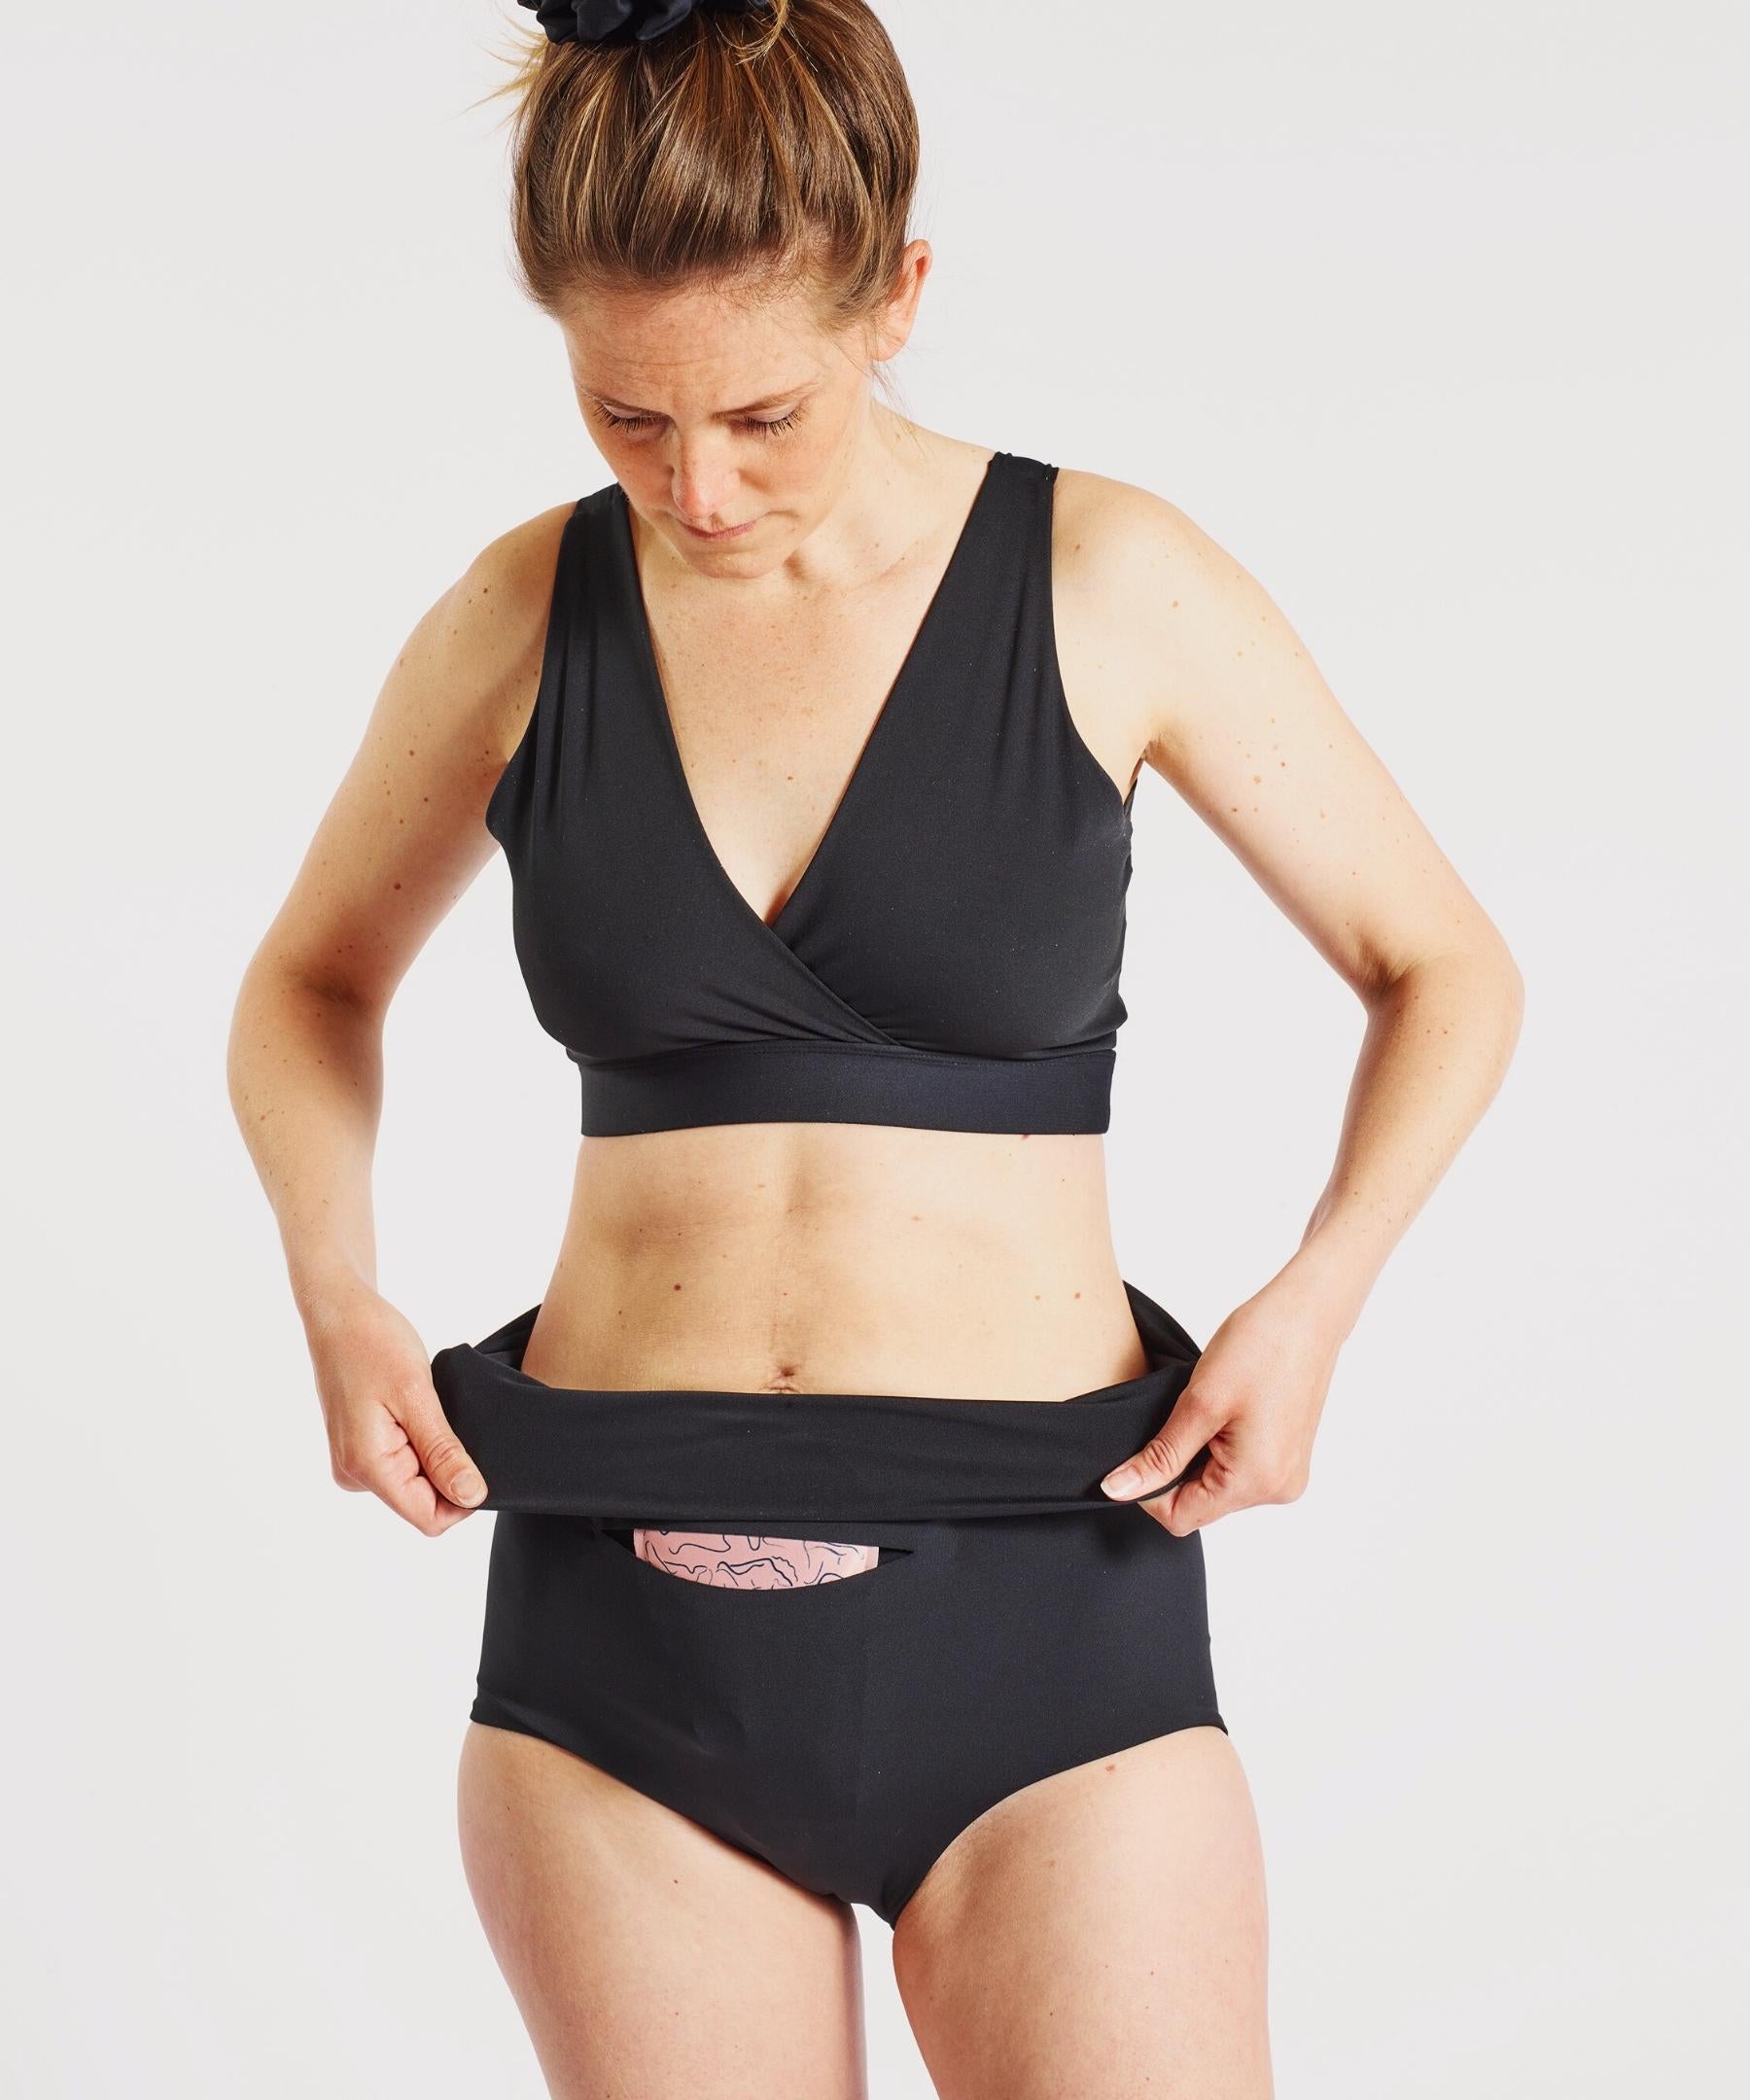 Are postpartum compression underwear worth it? #momlove #momtummy